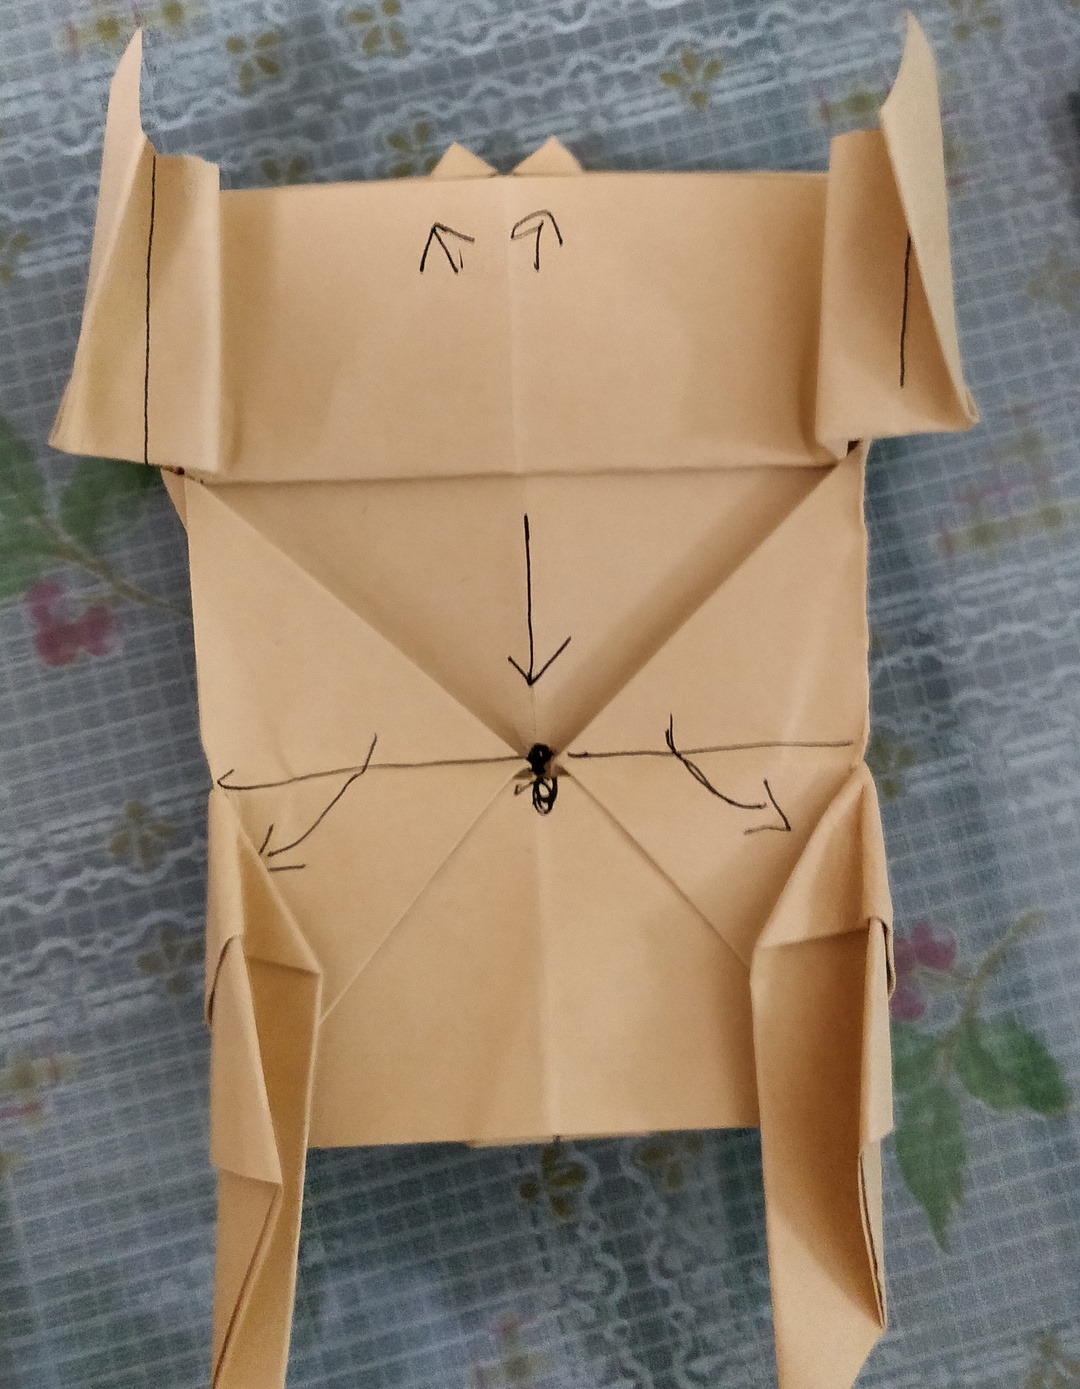 Origami Robots / 折纸机器人 - Guanyun Wang | 王冠云